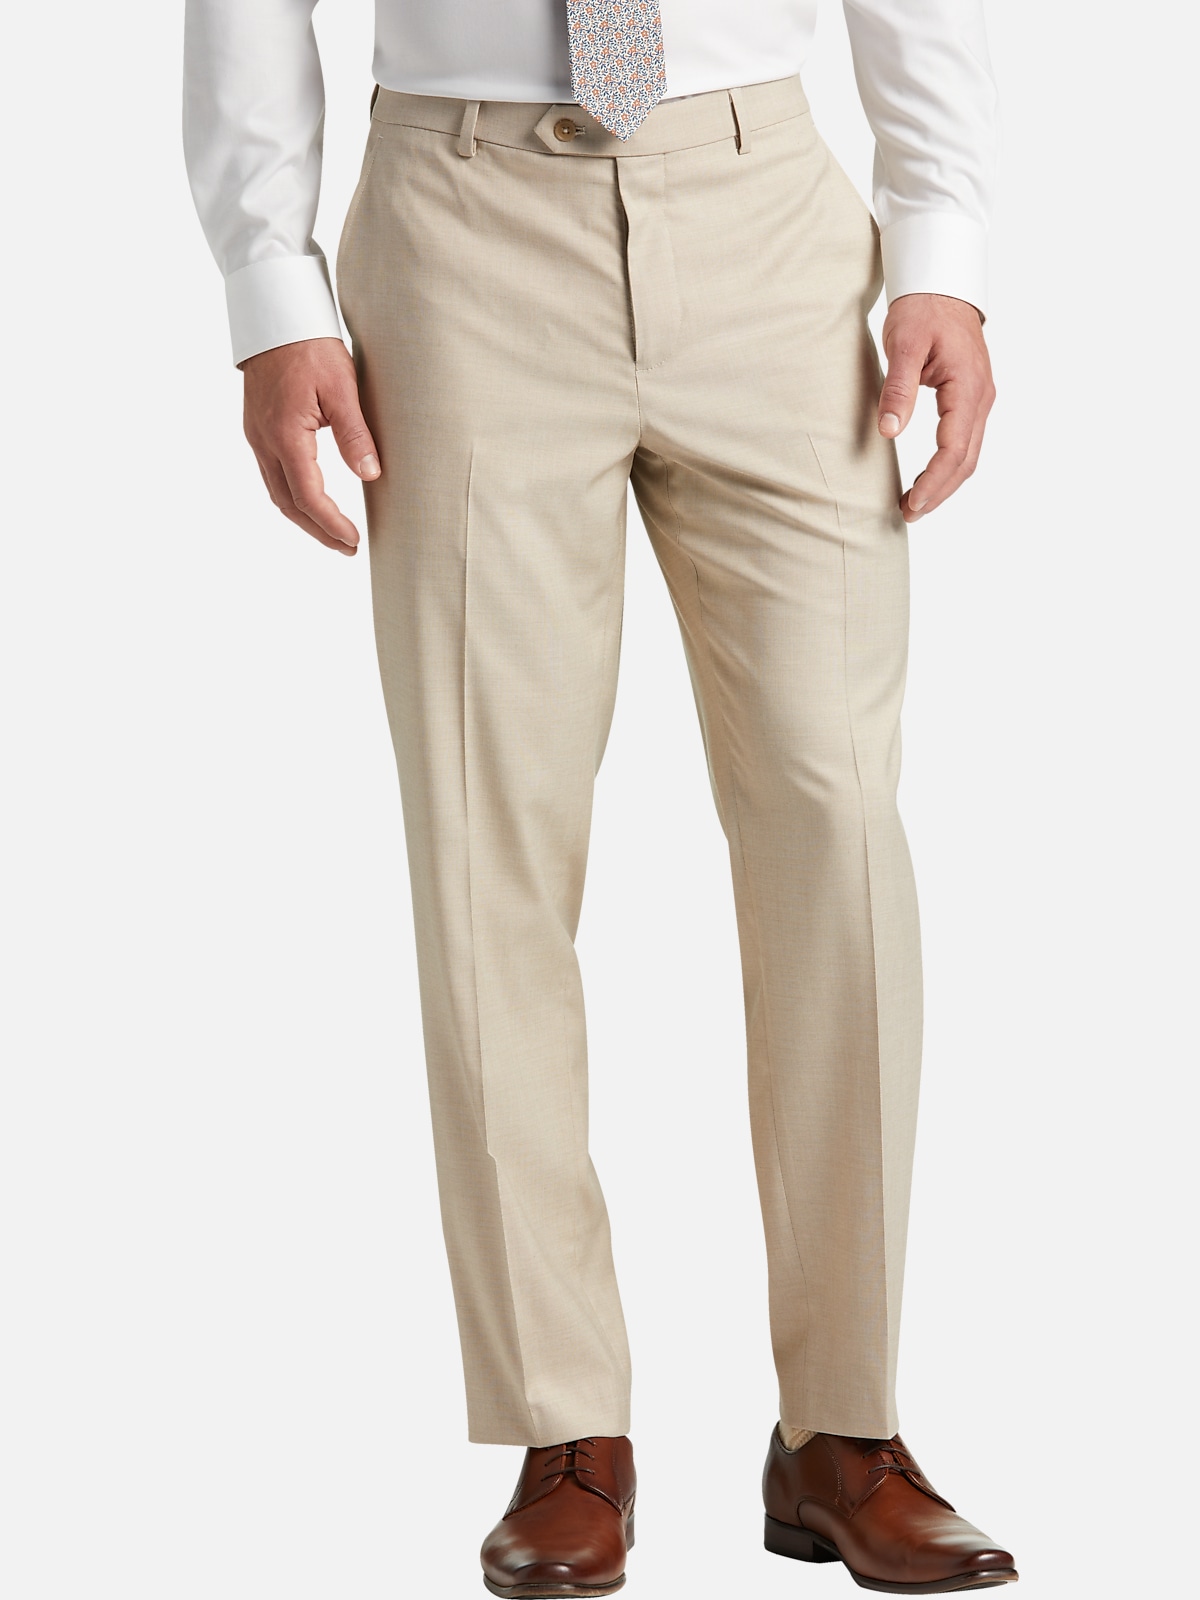 Pronto Uomo Slim Fit Dress Pants | Men's Pants | Moores Clothing